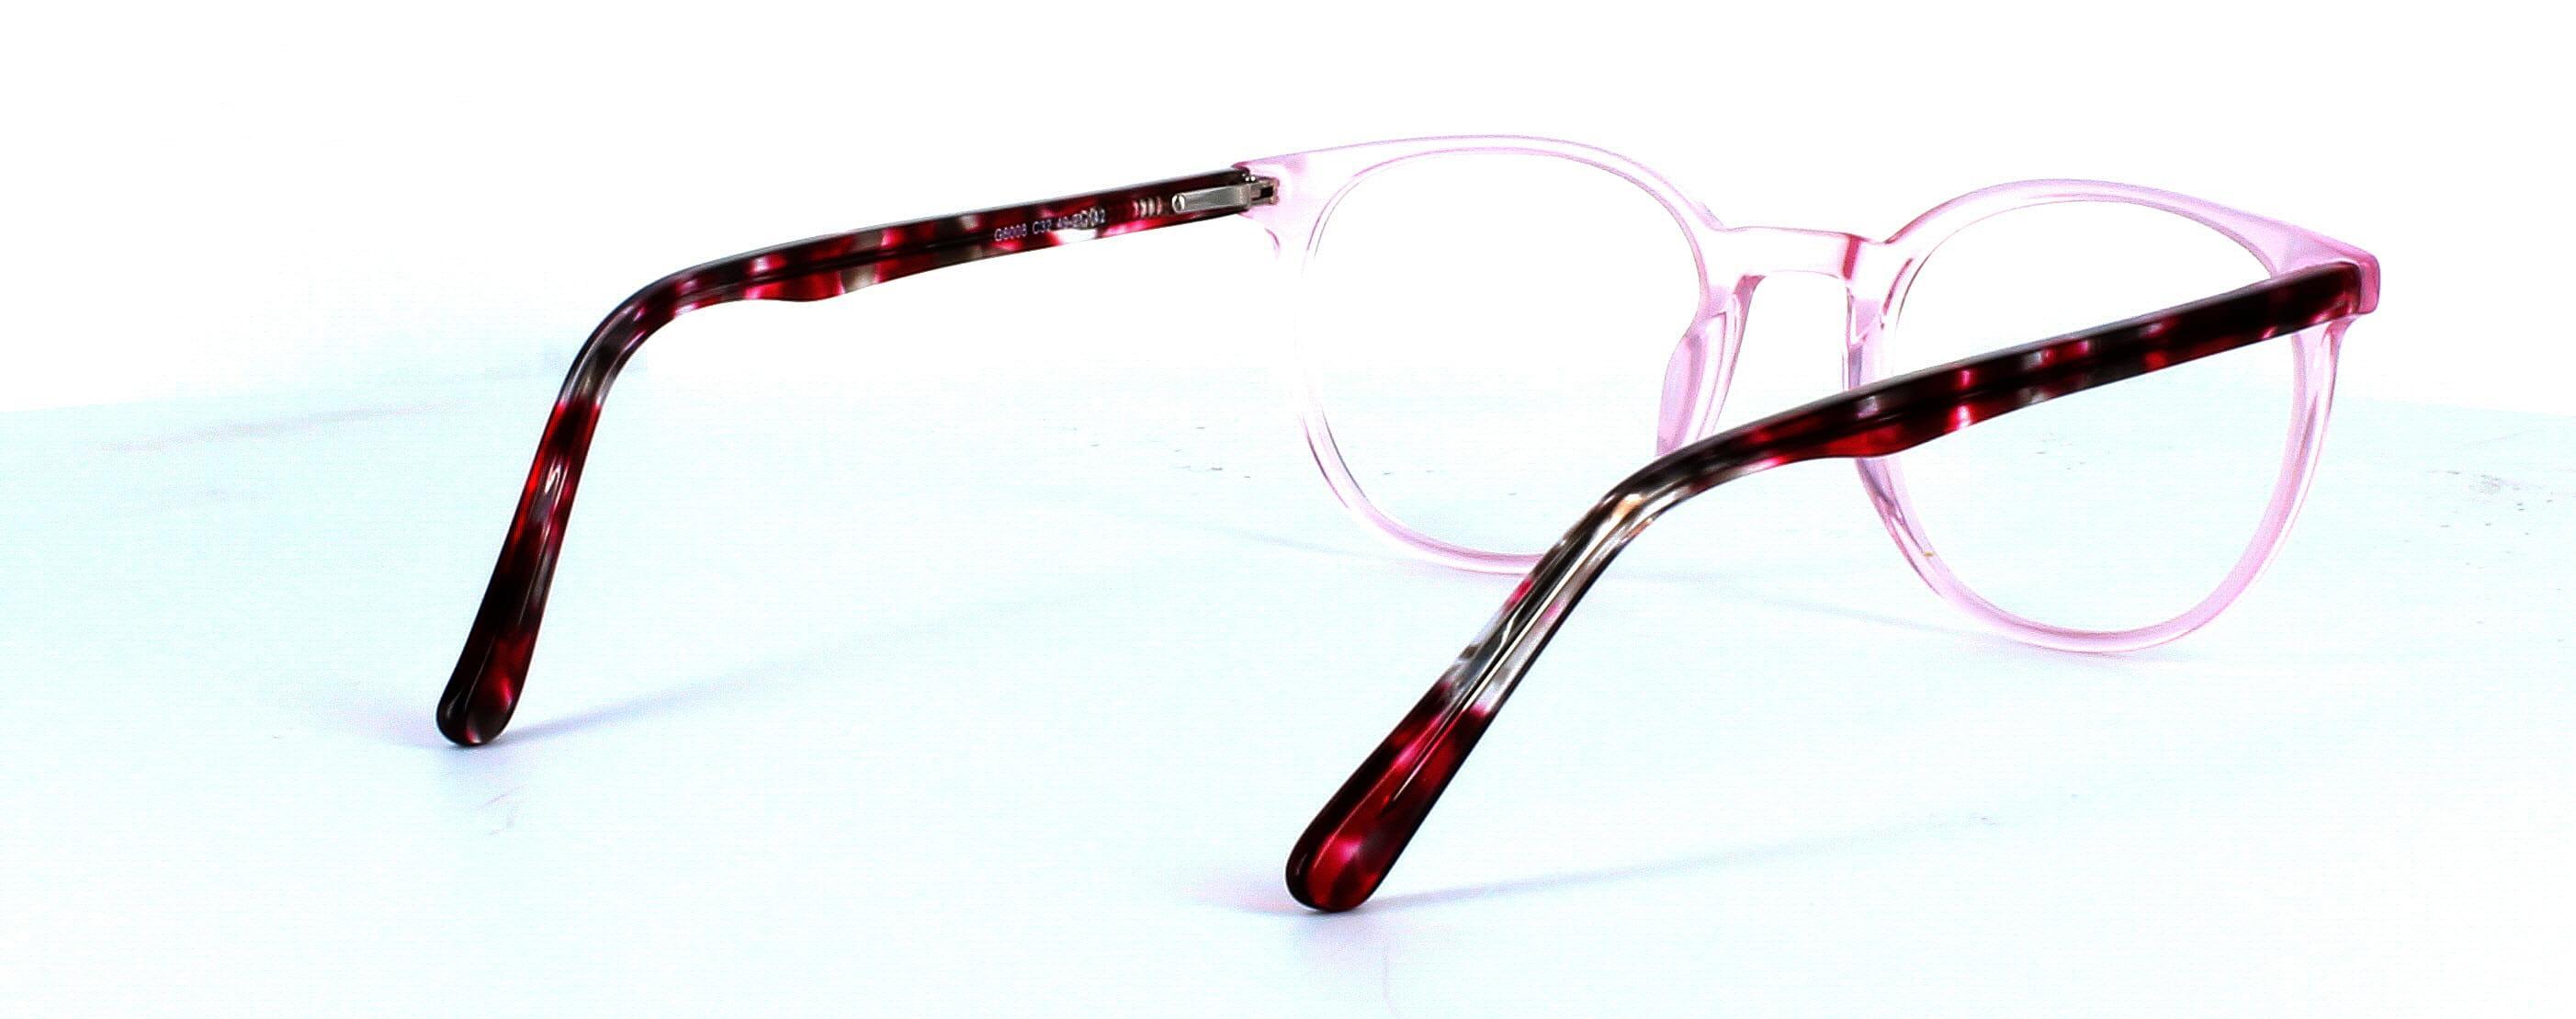 Venatici - Ladies crystal pink plastic glasses - image view 4